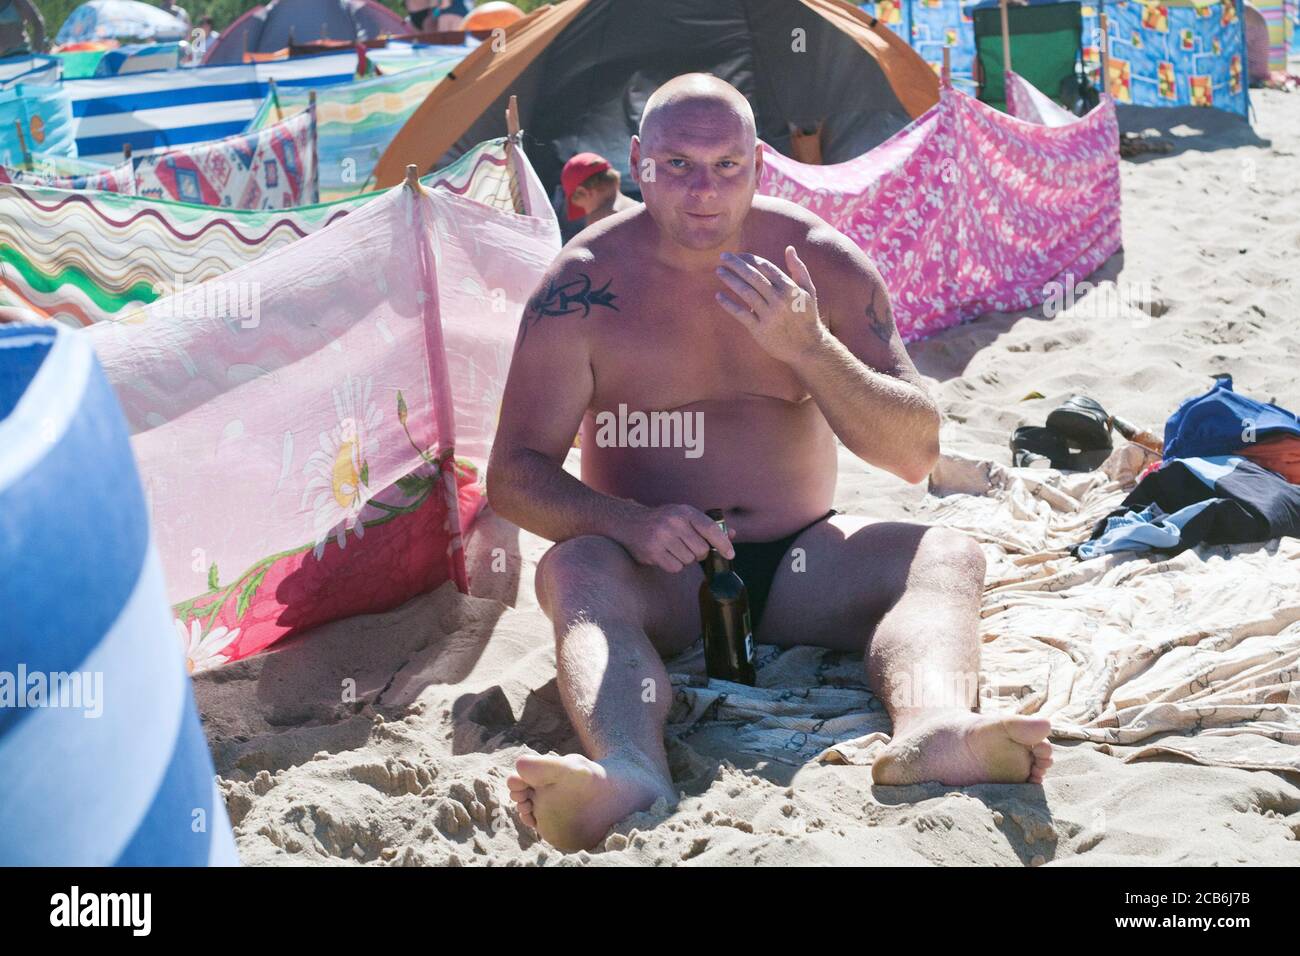 Poland, Wladyslawowo in Pomeranian province 14.08.2015. The man drinking the beer on the beach. Photo CTK/Grzegorz Klatka. Stock Photo